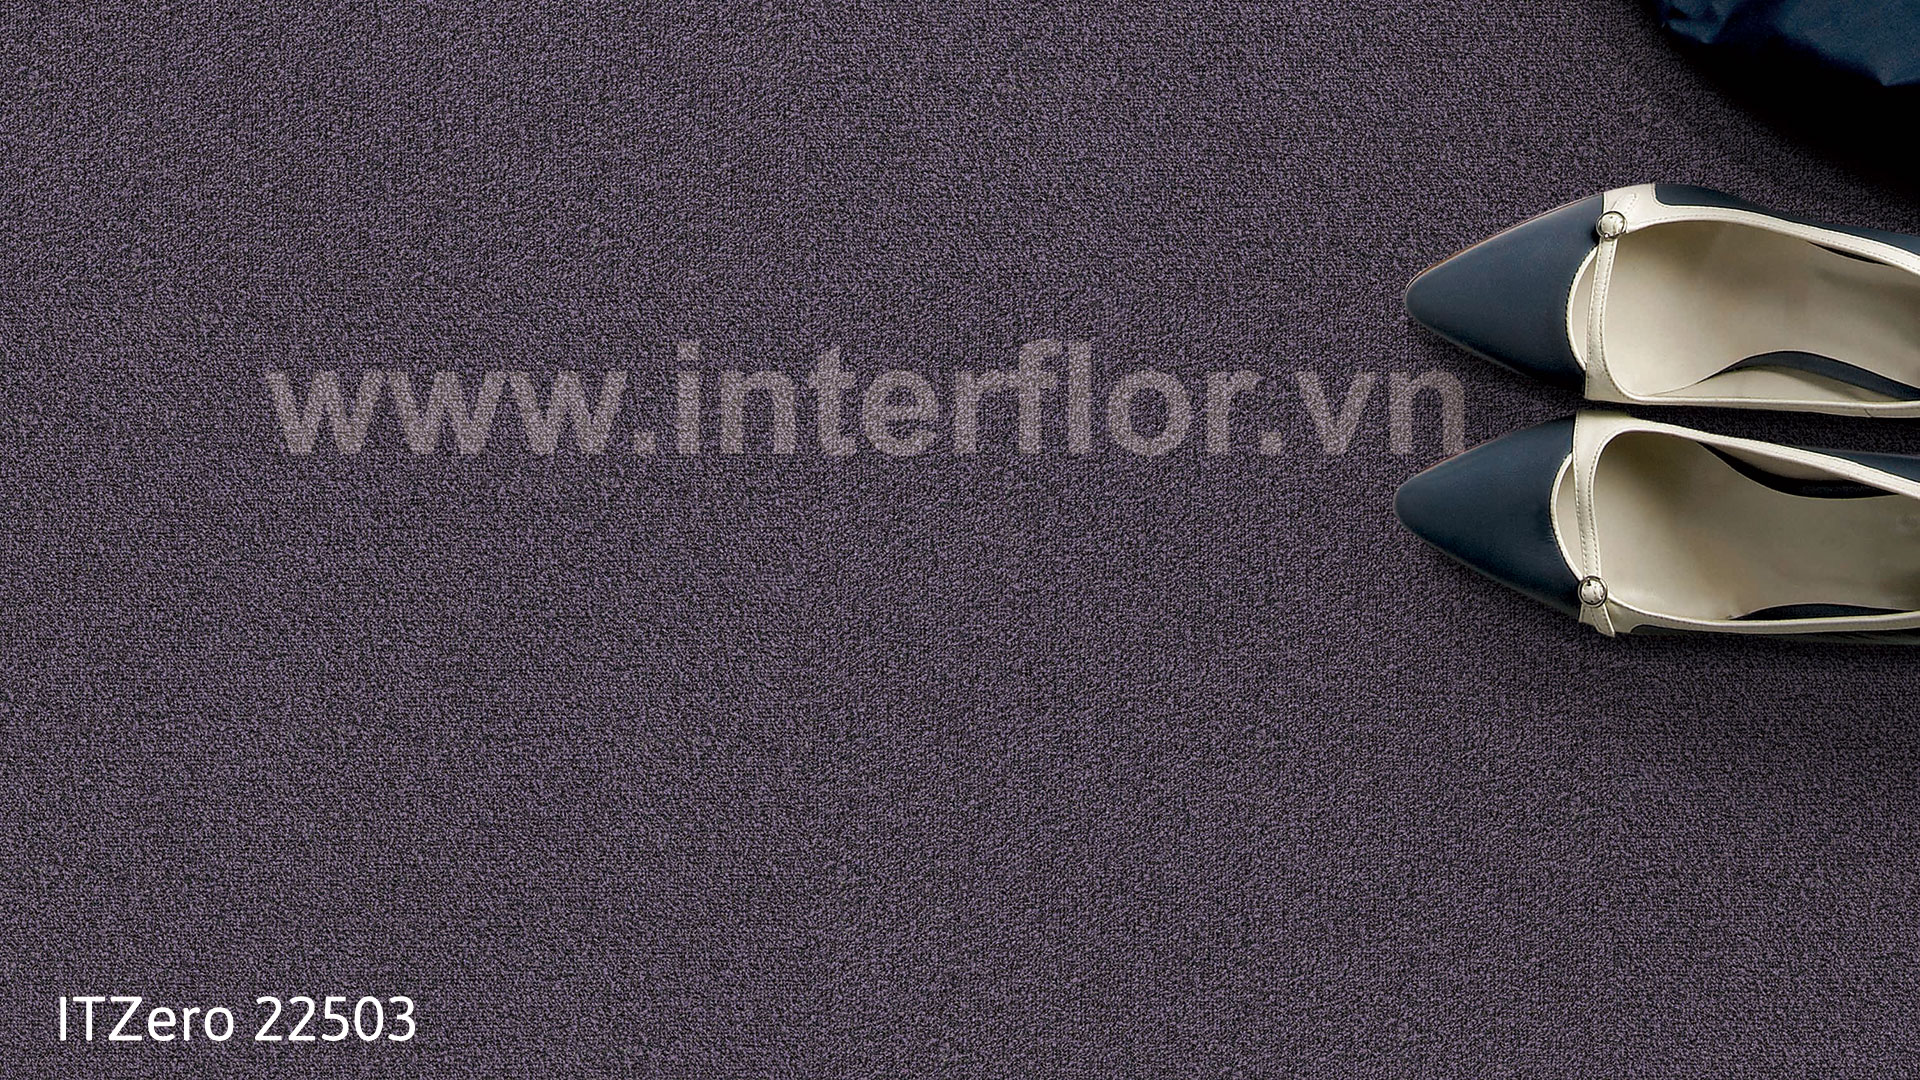 Thảm Interflor ITZero 22503